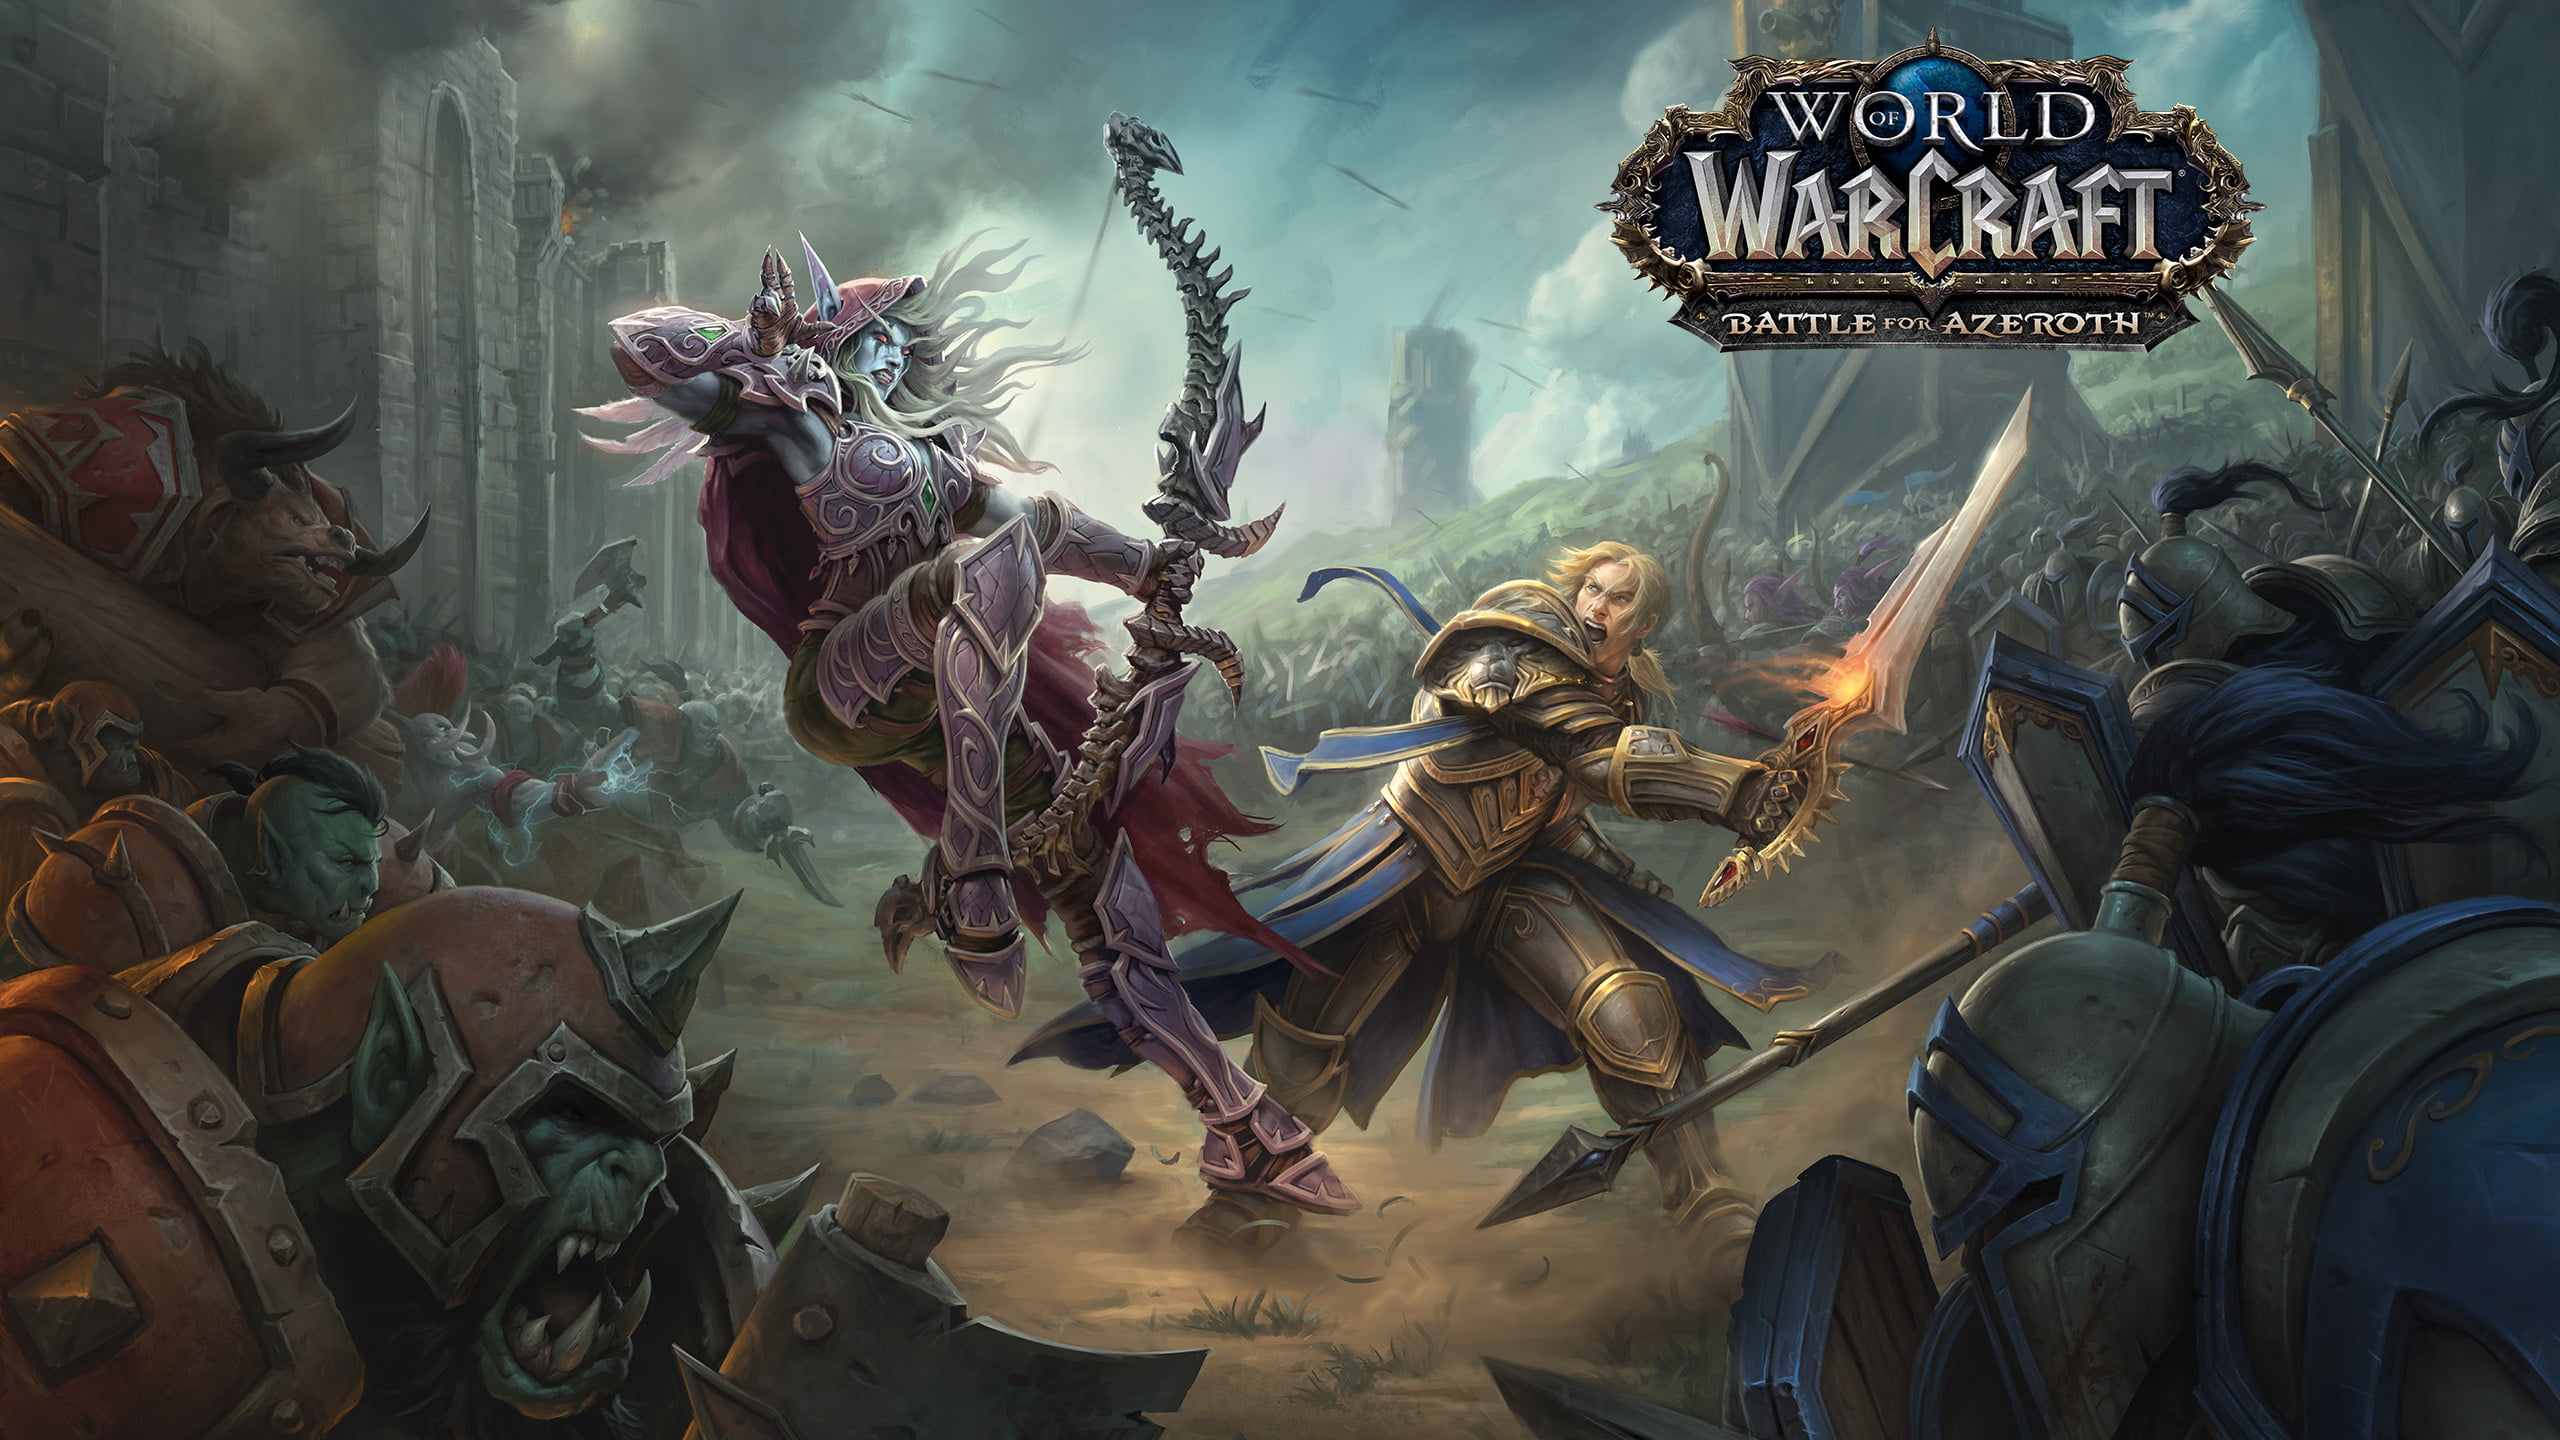 World of WarCraft digital wallpaper, World of Warcraft: Battle for Azeroth